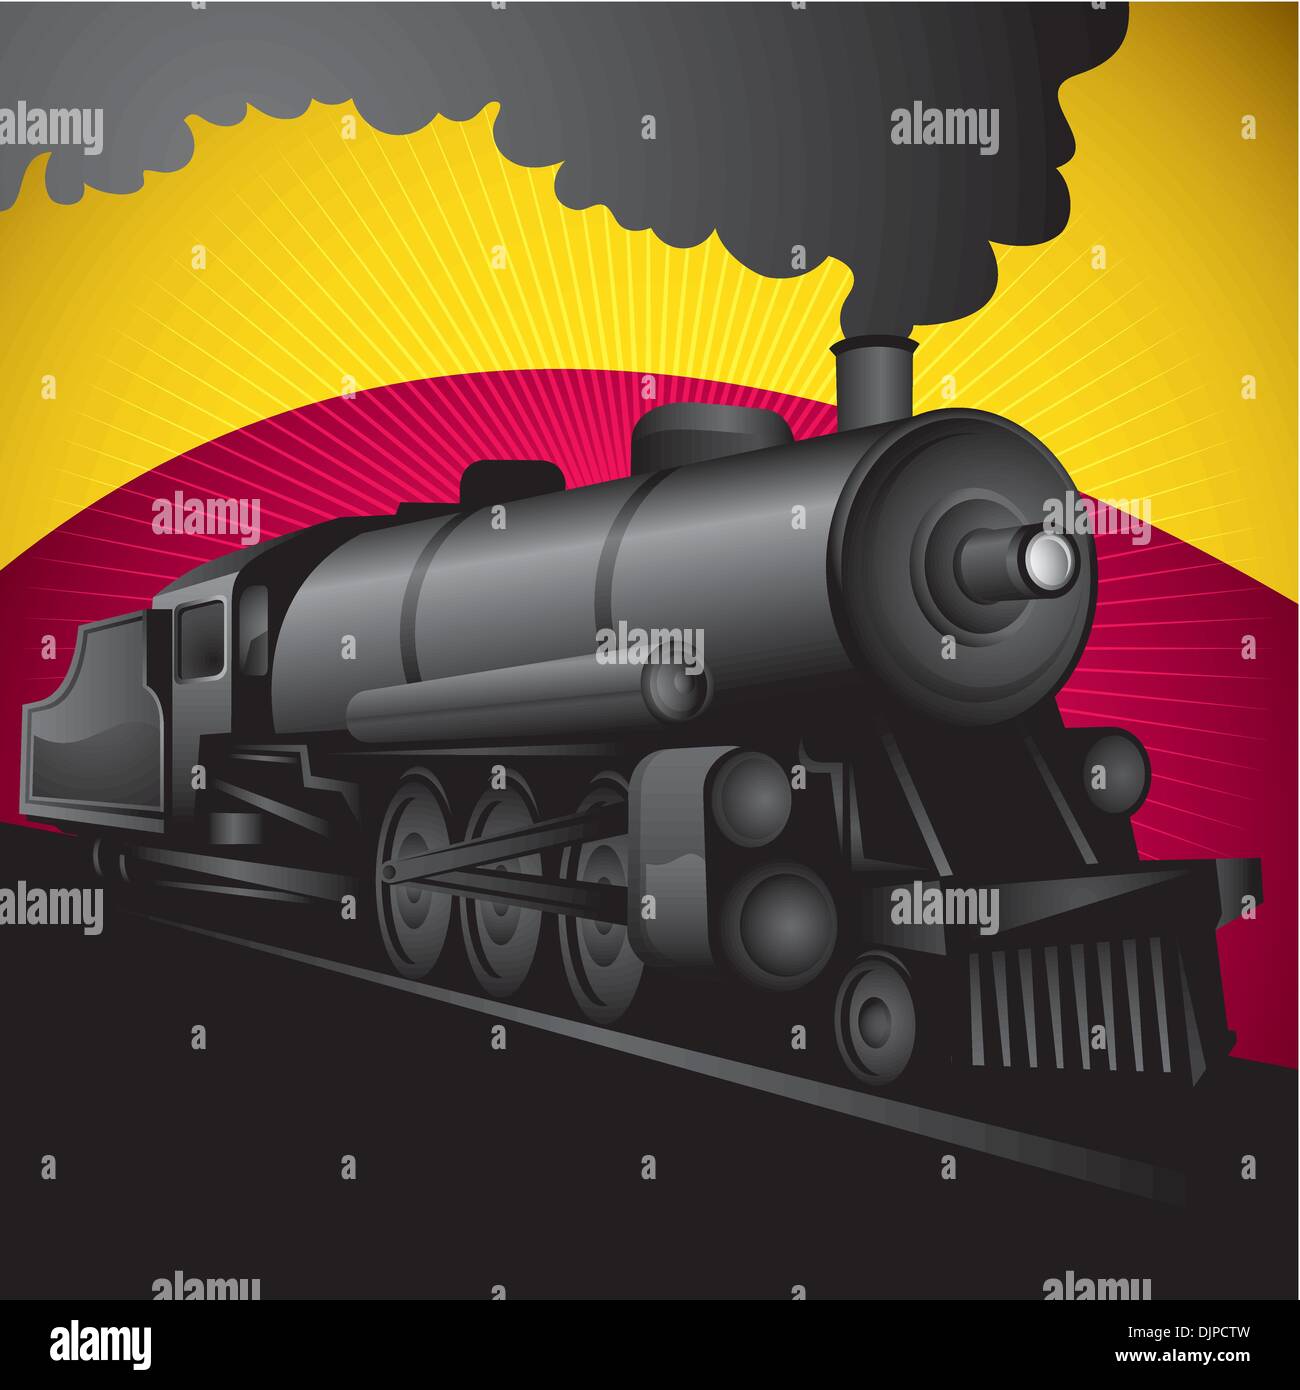 Illustration of old stylized locomotive Stock Vector